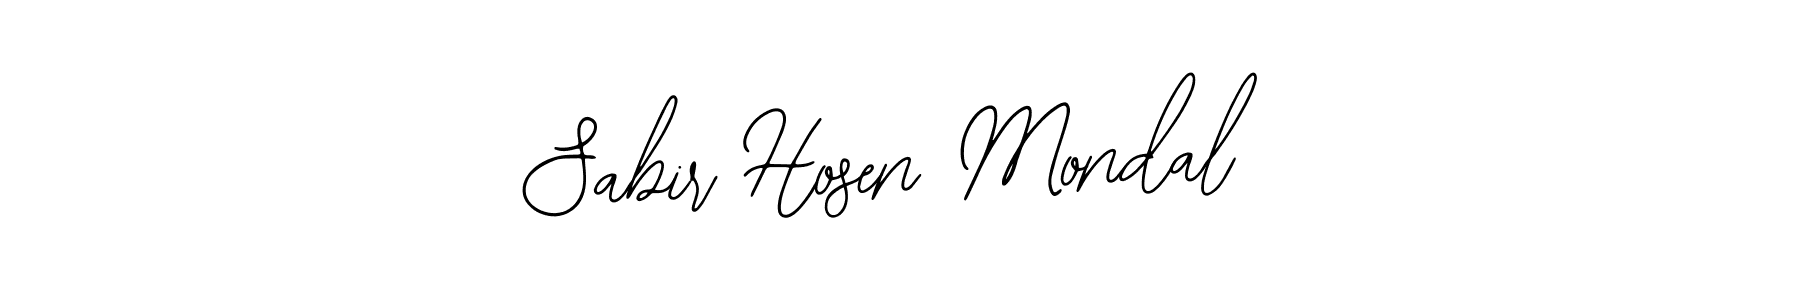 Make a beautiful signature design for name Sabir Hosen Mondal. Use this online signature maker to create a handwritten signature for free. Sabir Hosen Mondal signature style 12 images and pictures png